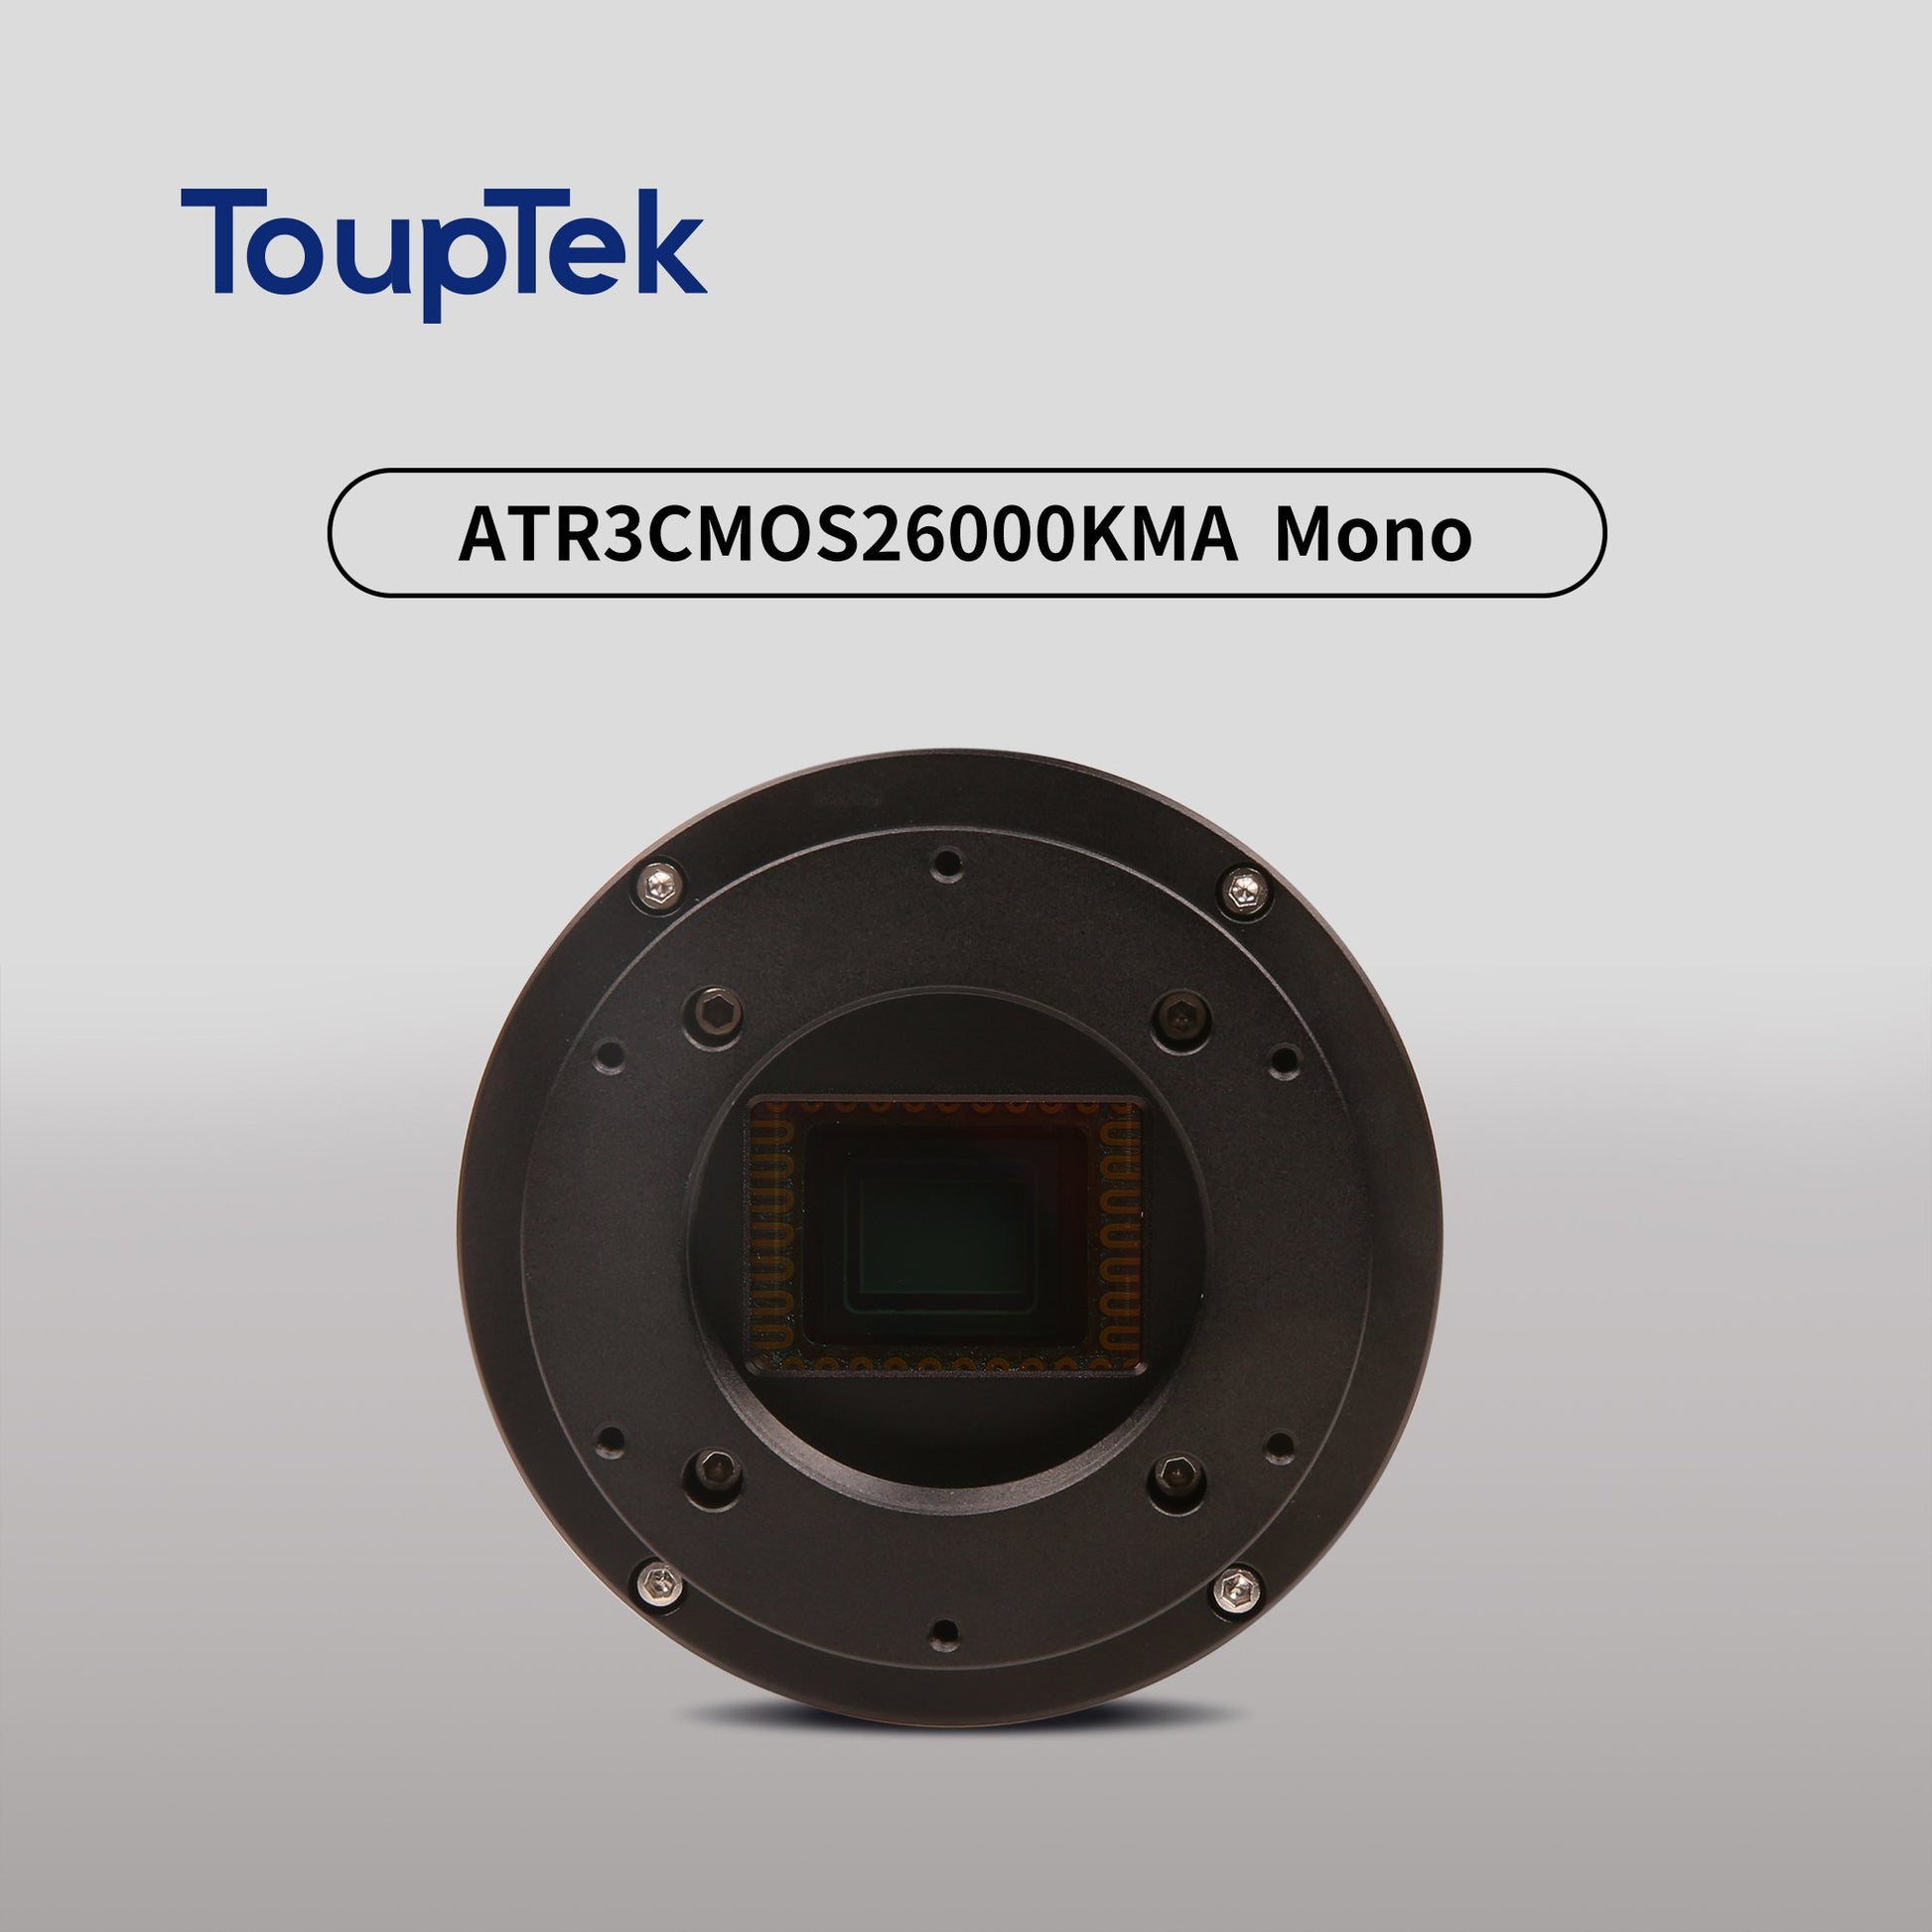 ATR3CMOS26000KMA IMX571M Mono Camera